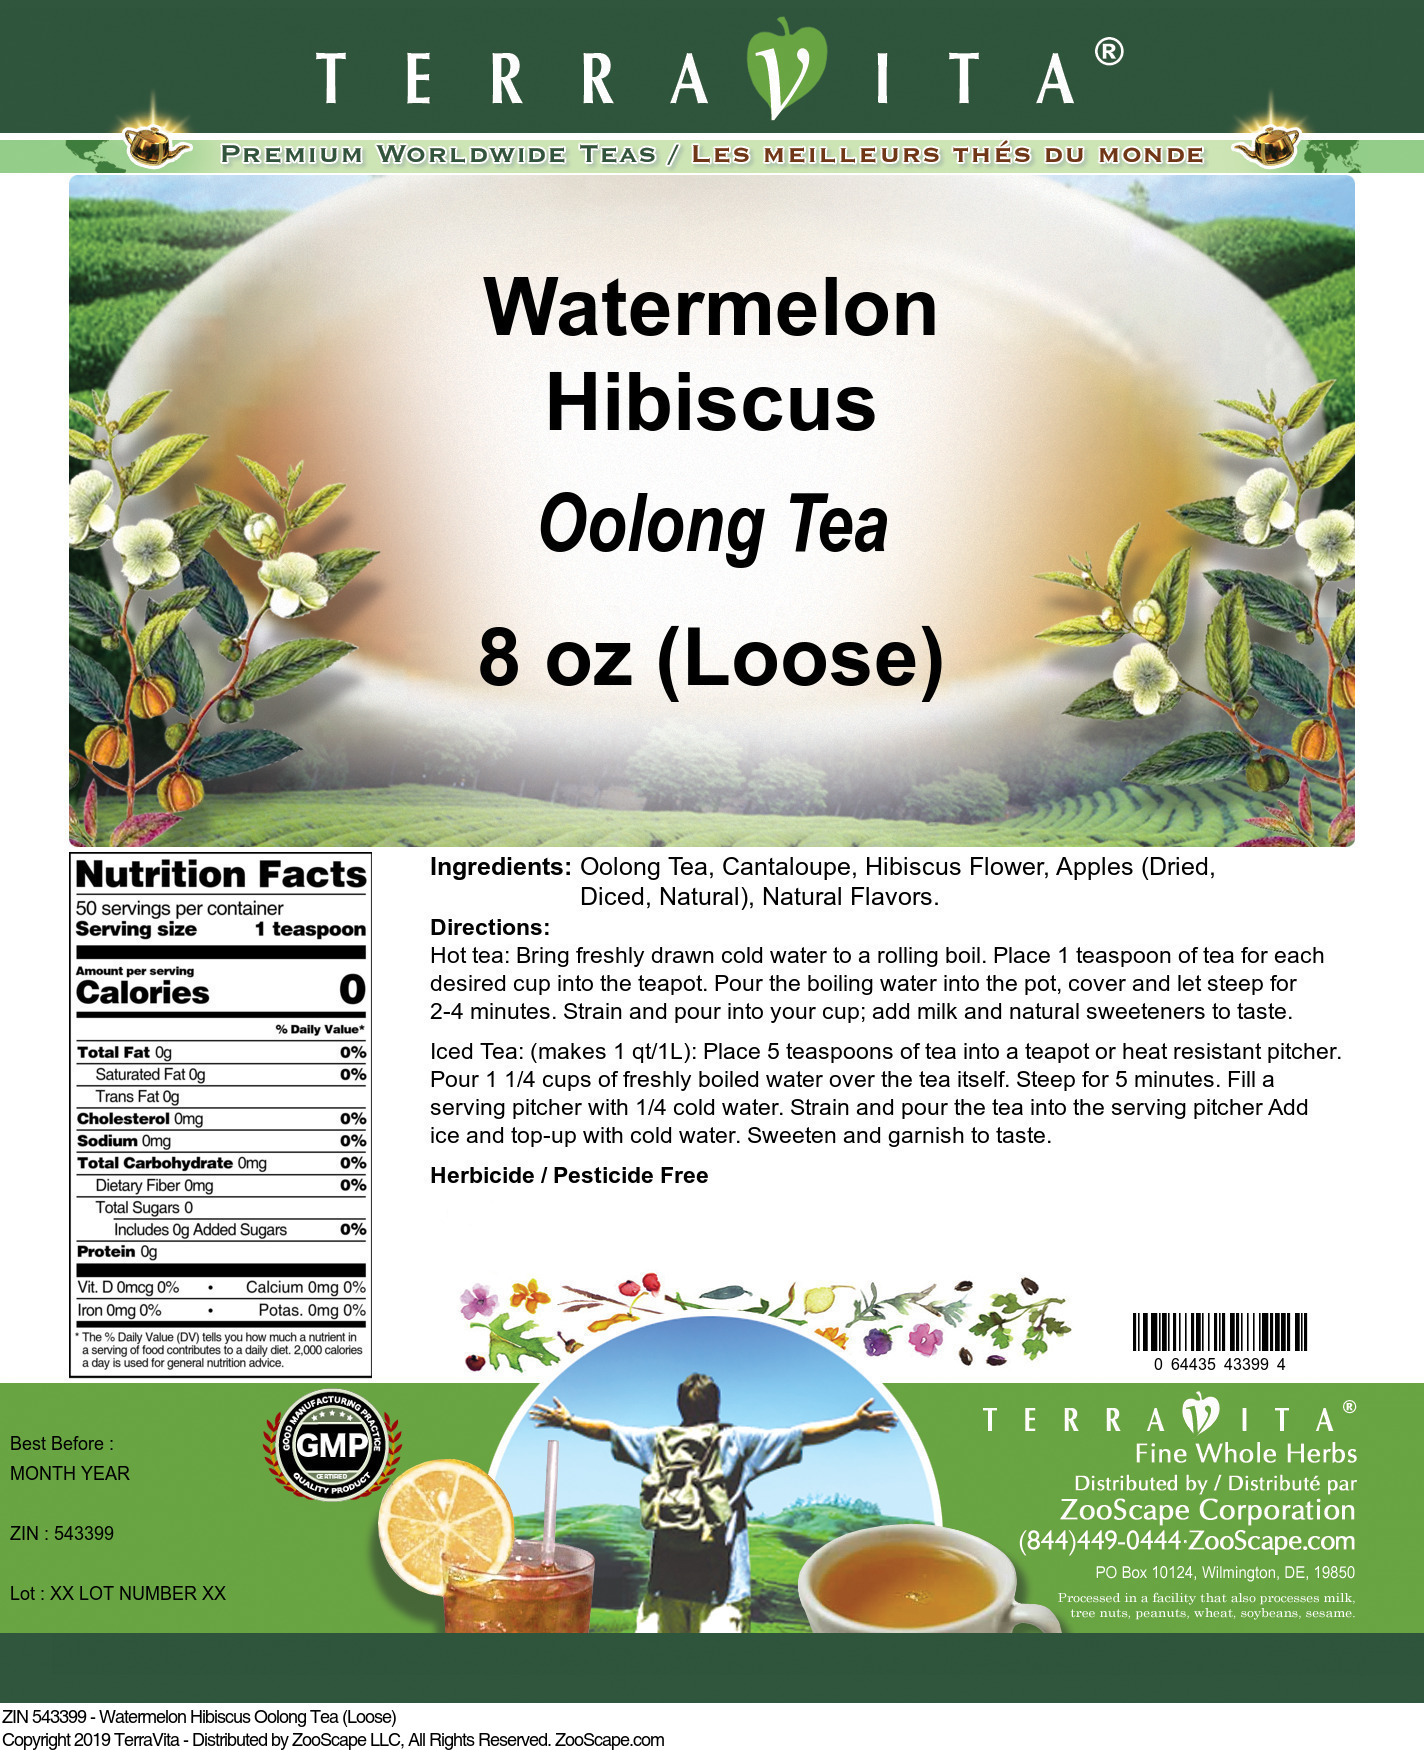 Watermelon Hibiscus Oolong Tea (Loose) - Label